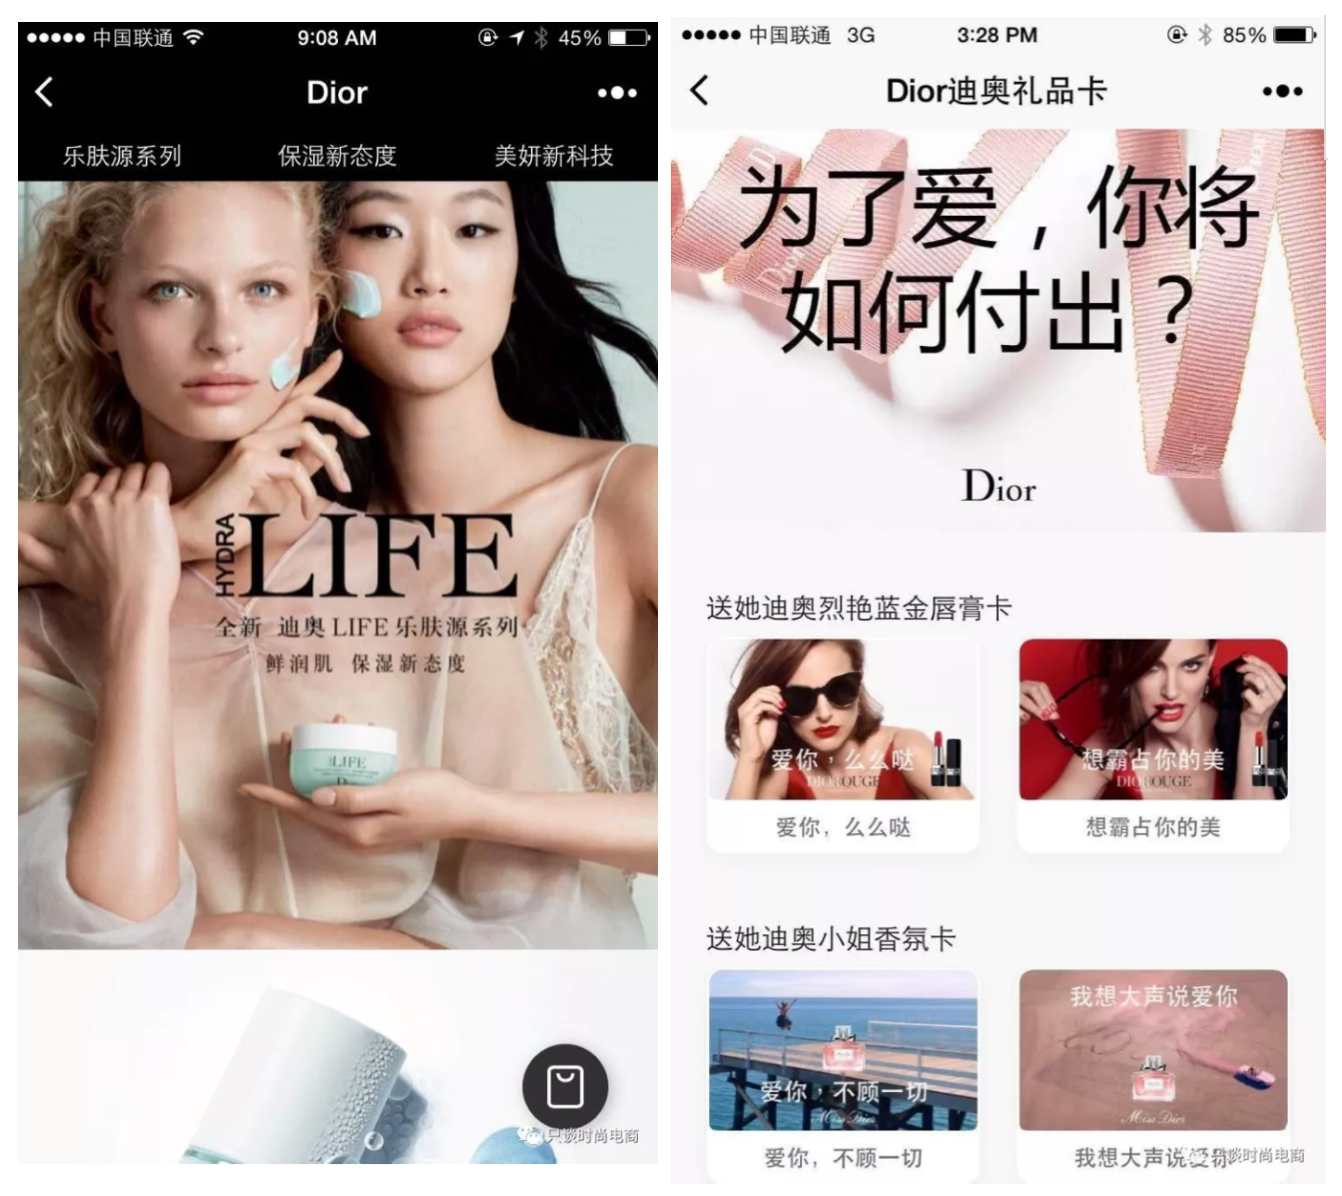 Dior beauty e-commerce mini-program.